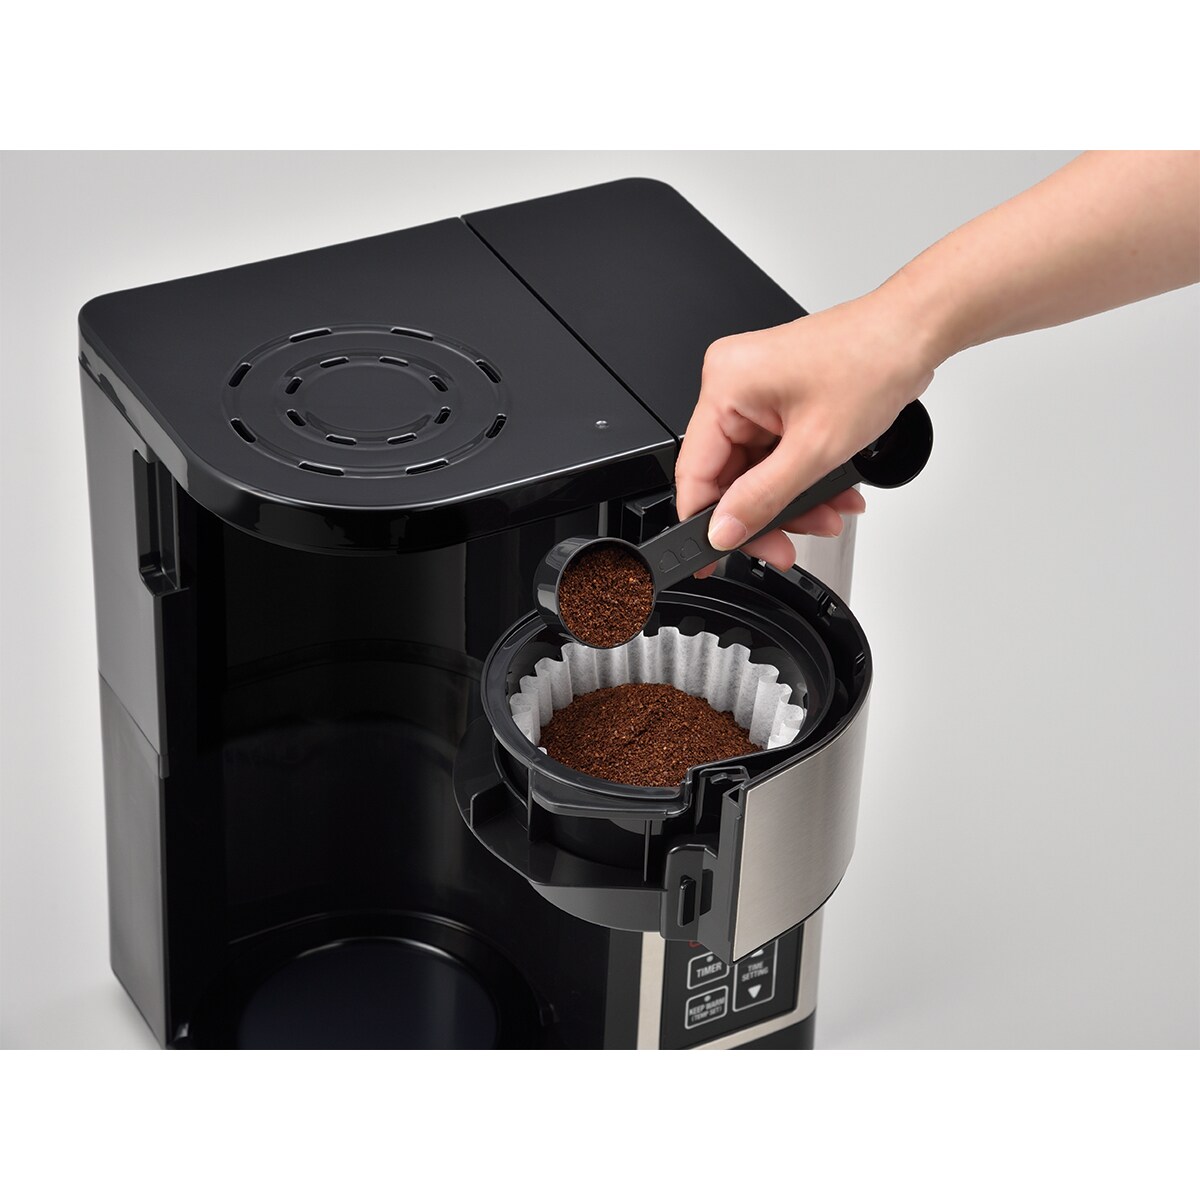 https://ak1.ostkcdn.com/images/products/13261102/Zojirushi-Fresh-Brew-Plus-12-Cup-Coffee-Maker-72681743-cd53-40b2-961a-42ebf7ce8b63.jpg